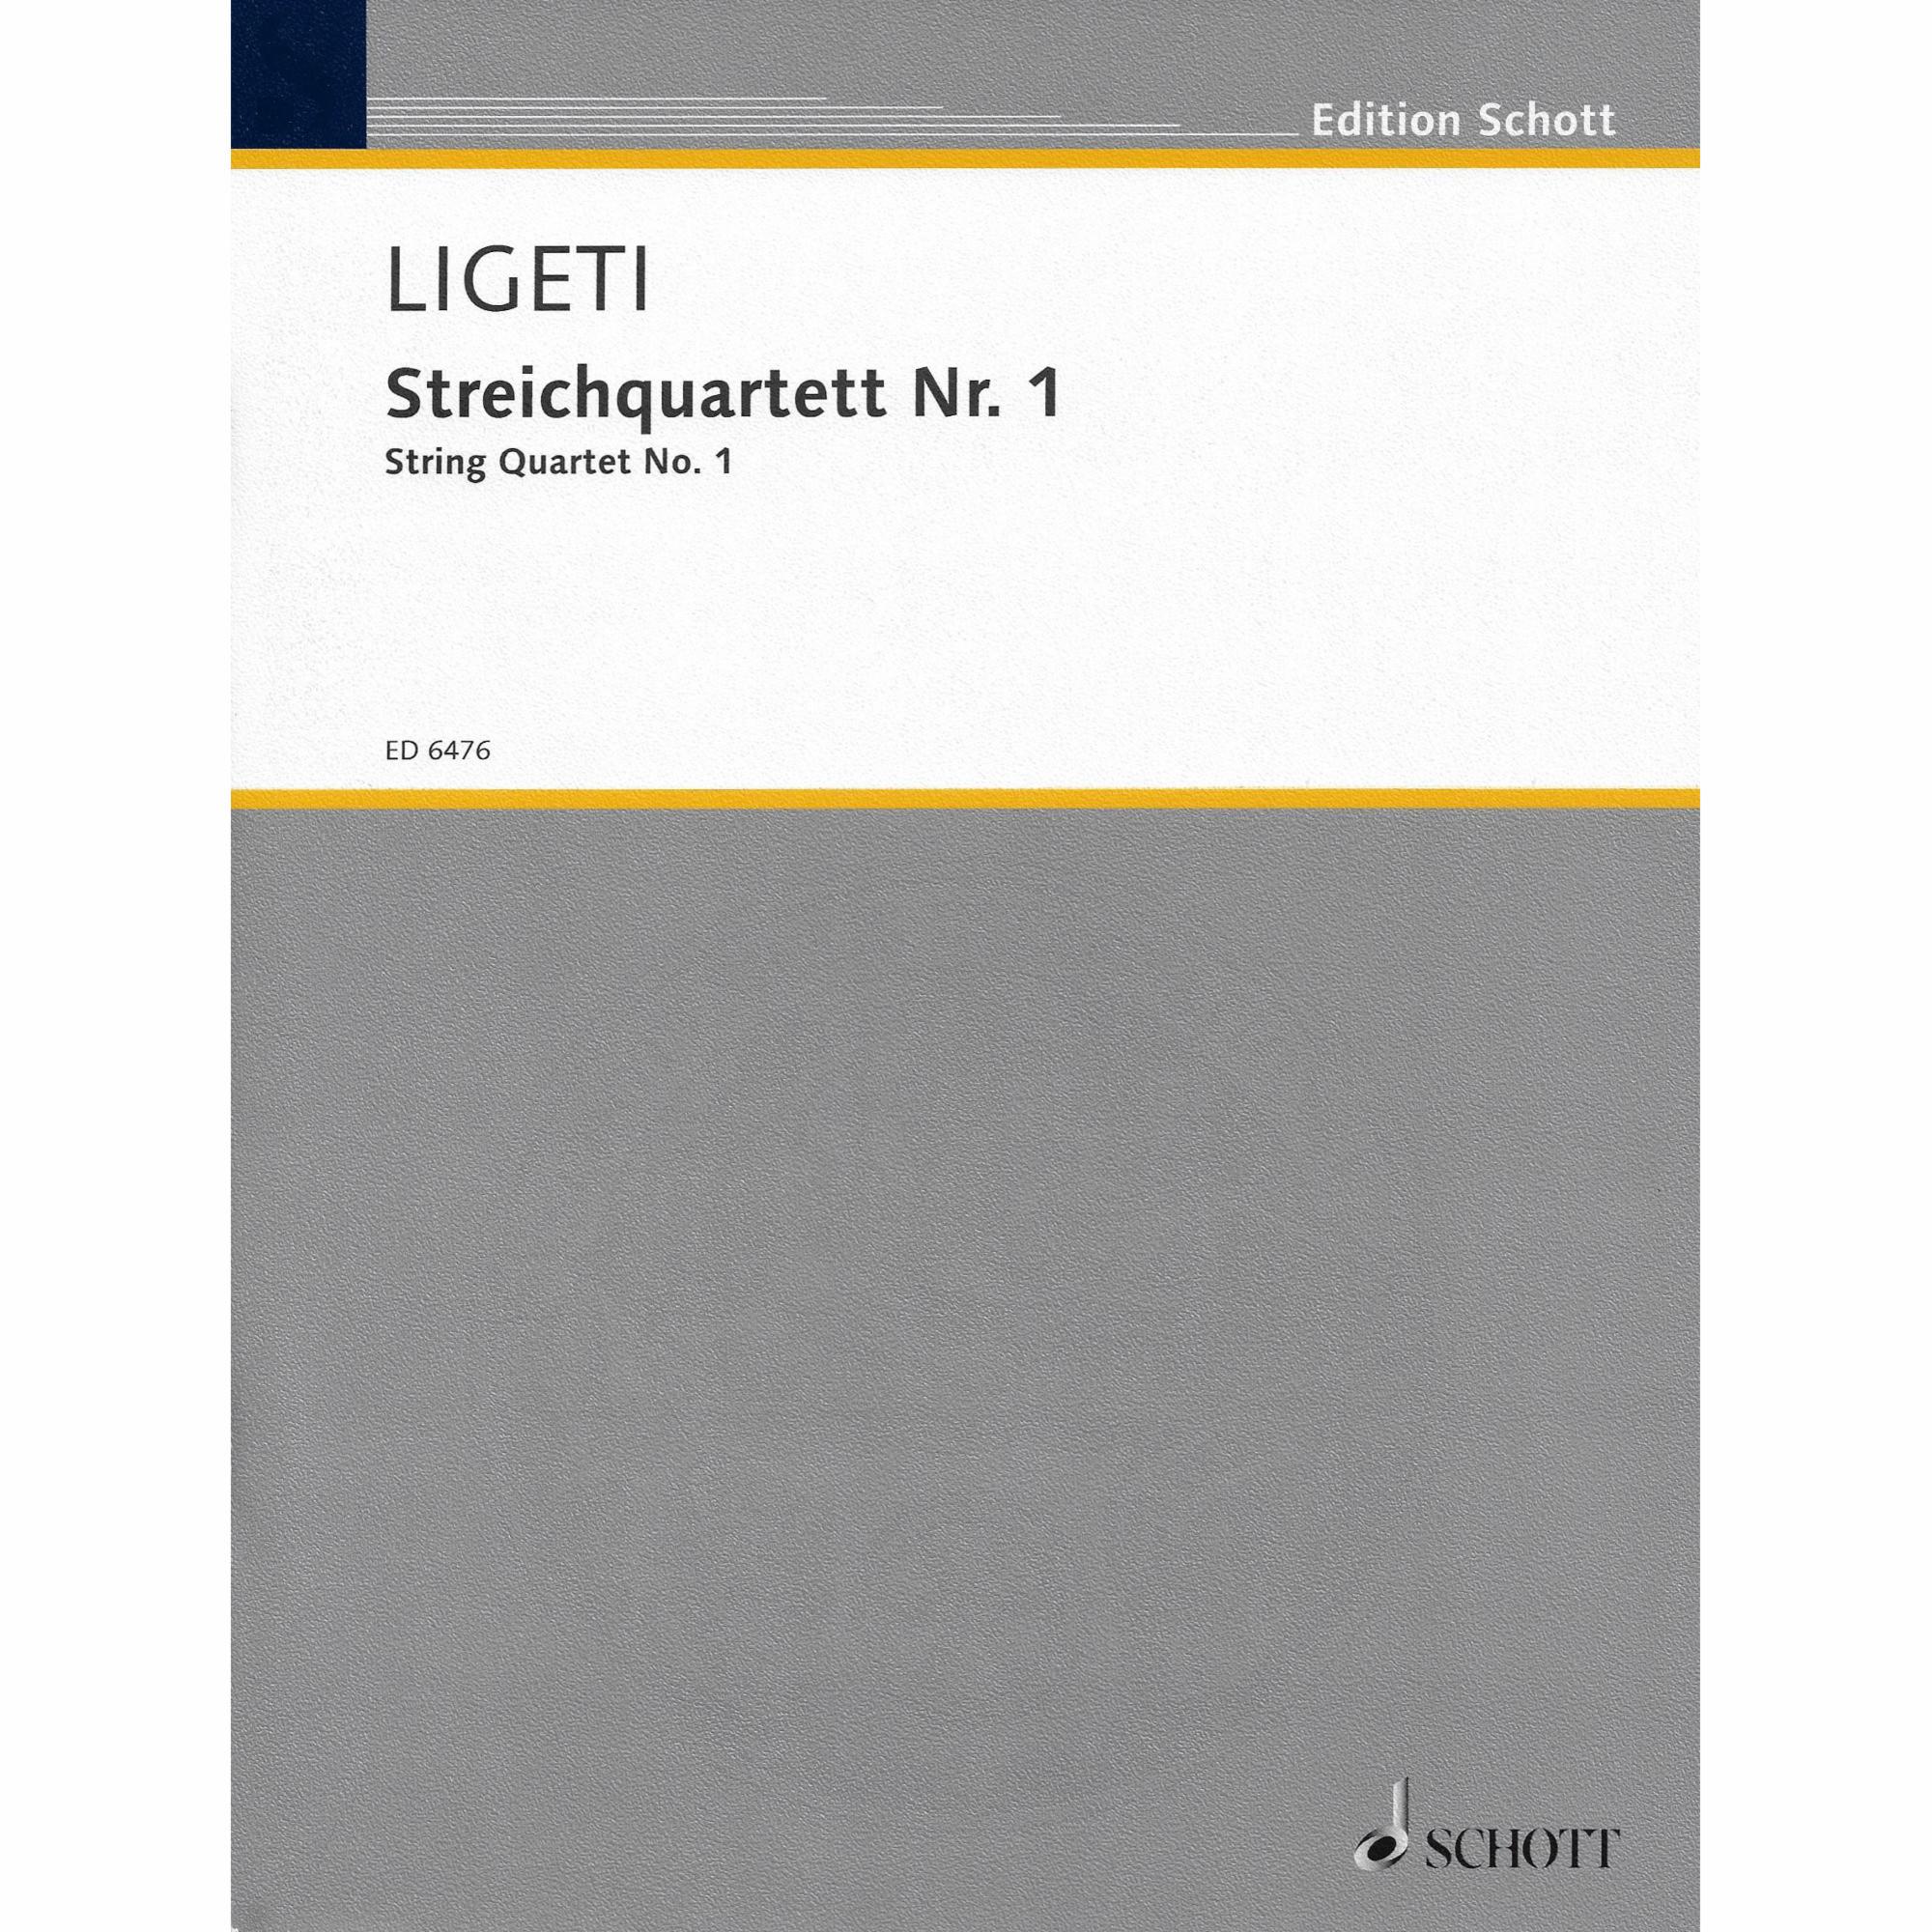 Ligeti -- String Quartet No. 1 (Metamorphoses Nocturnes)